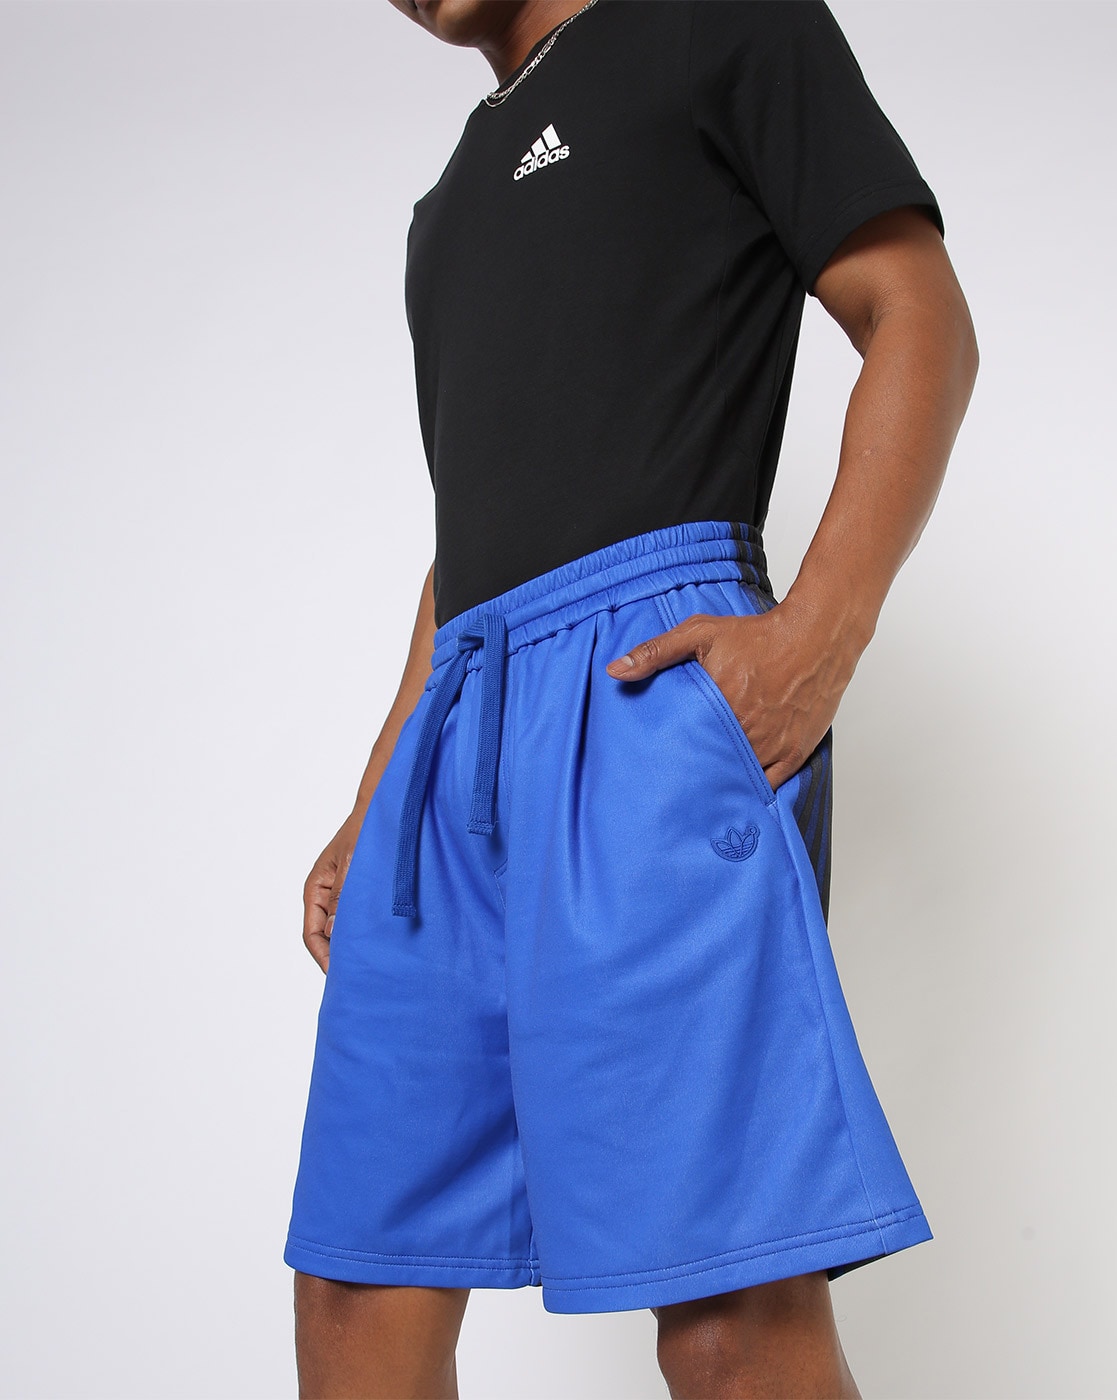 Buy Cotton Shorts Mens & Stylish Shorts For Men - Apella